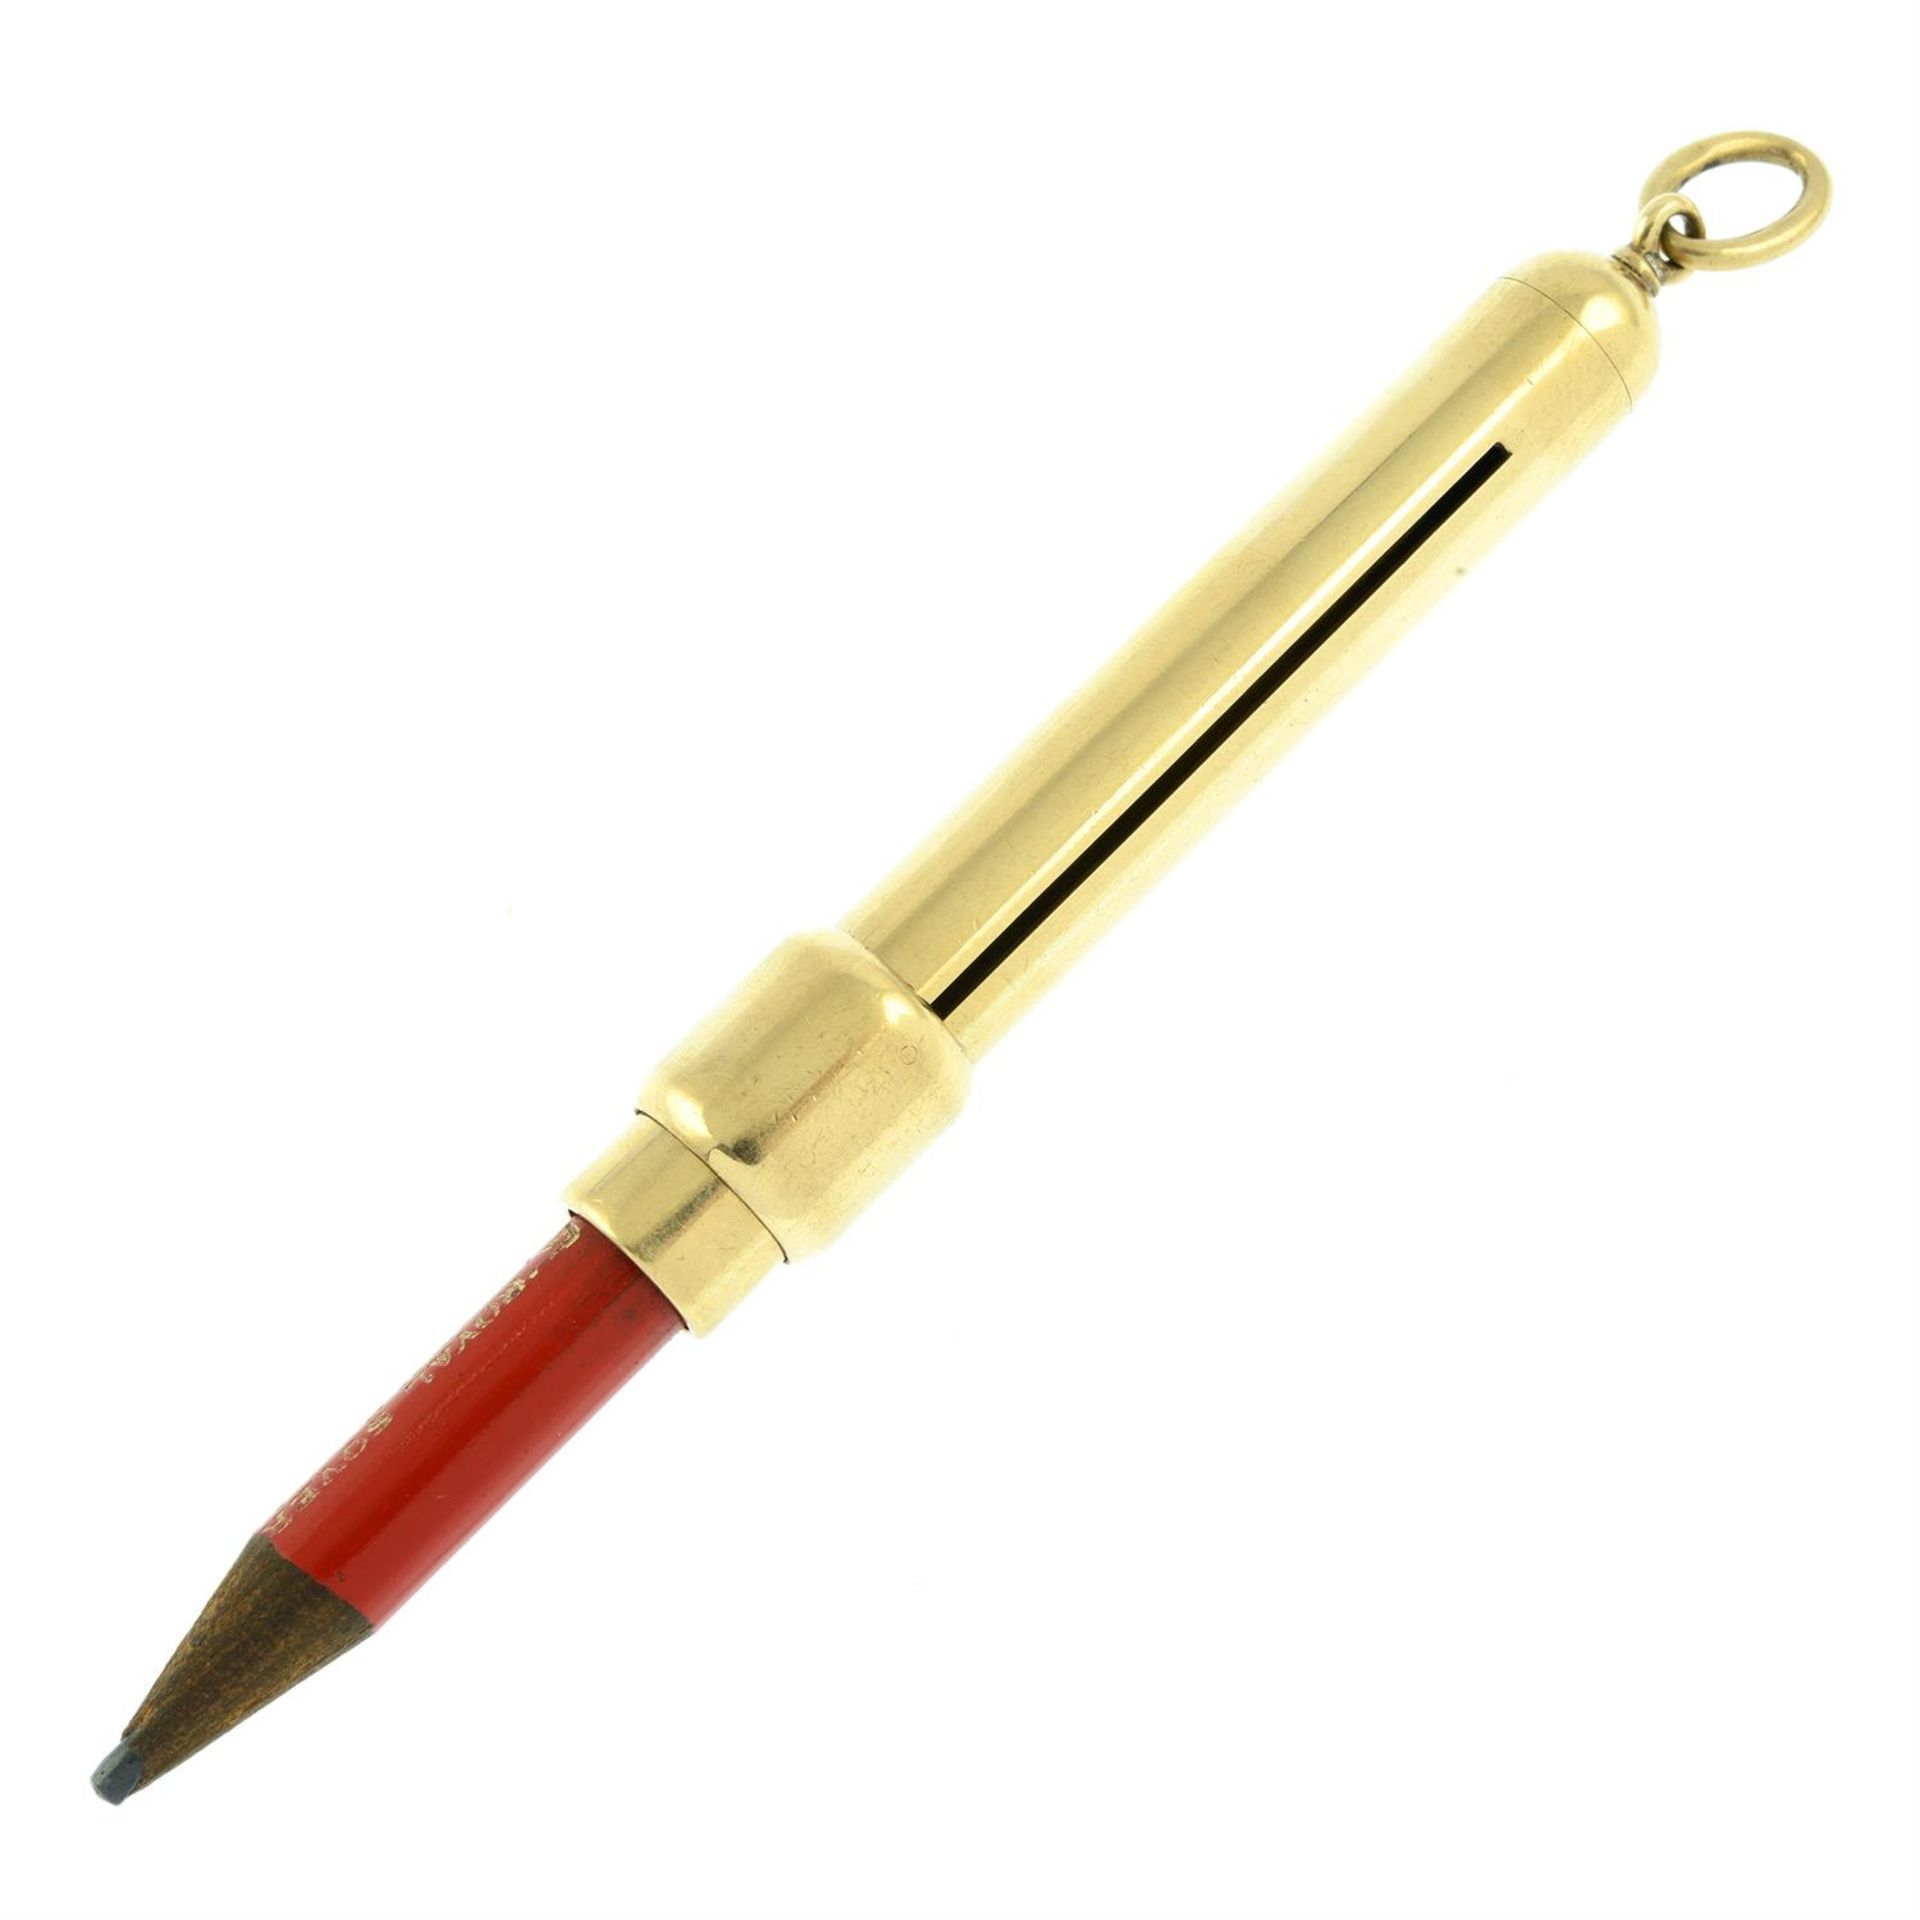 9ct gold retractable pencil, by Sampson Mordan & Co.